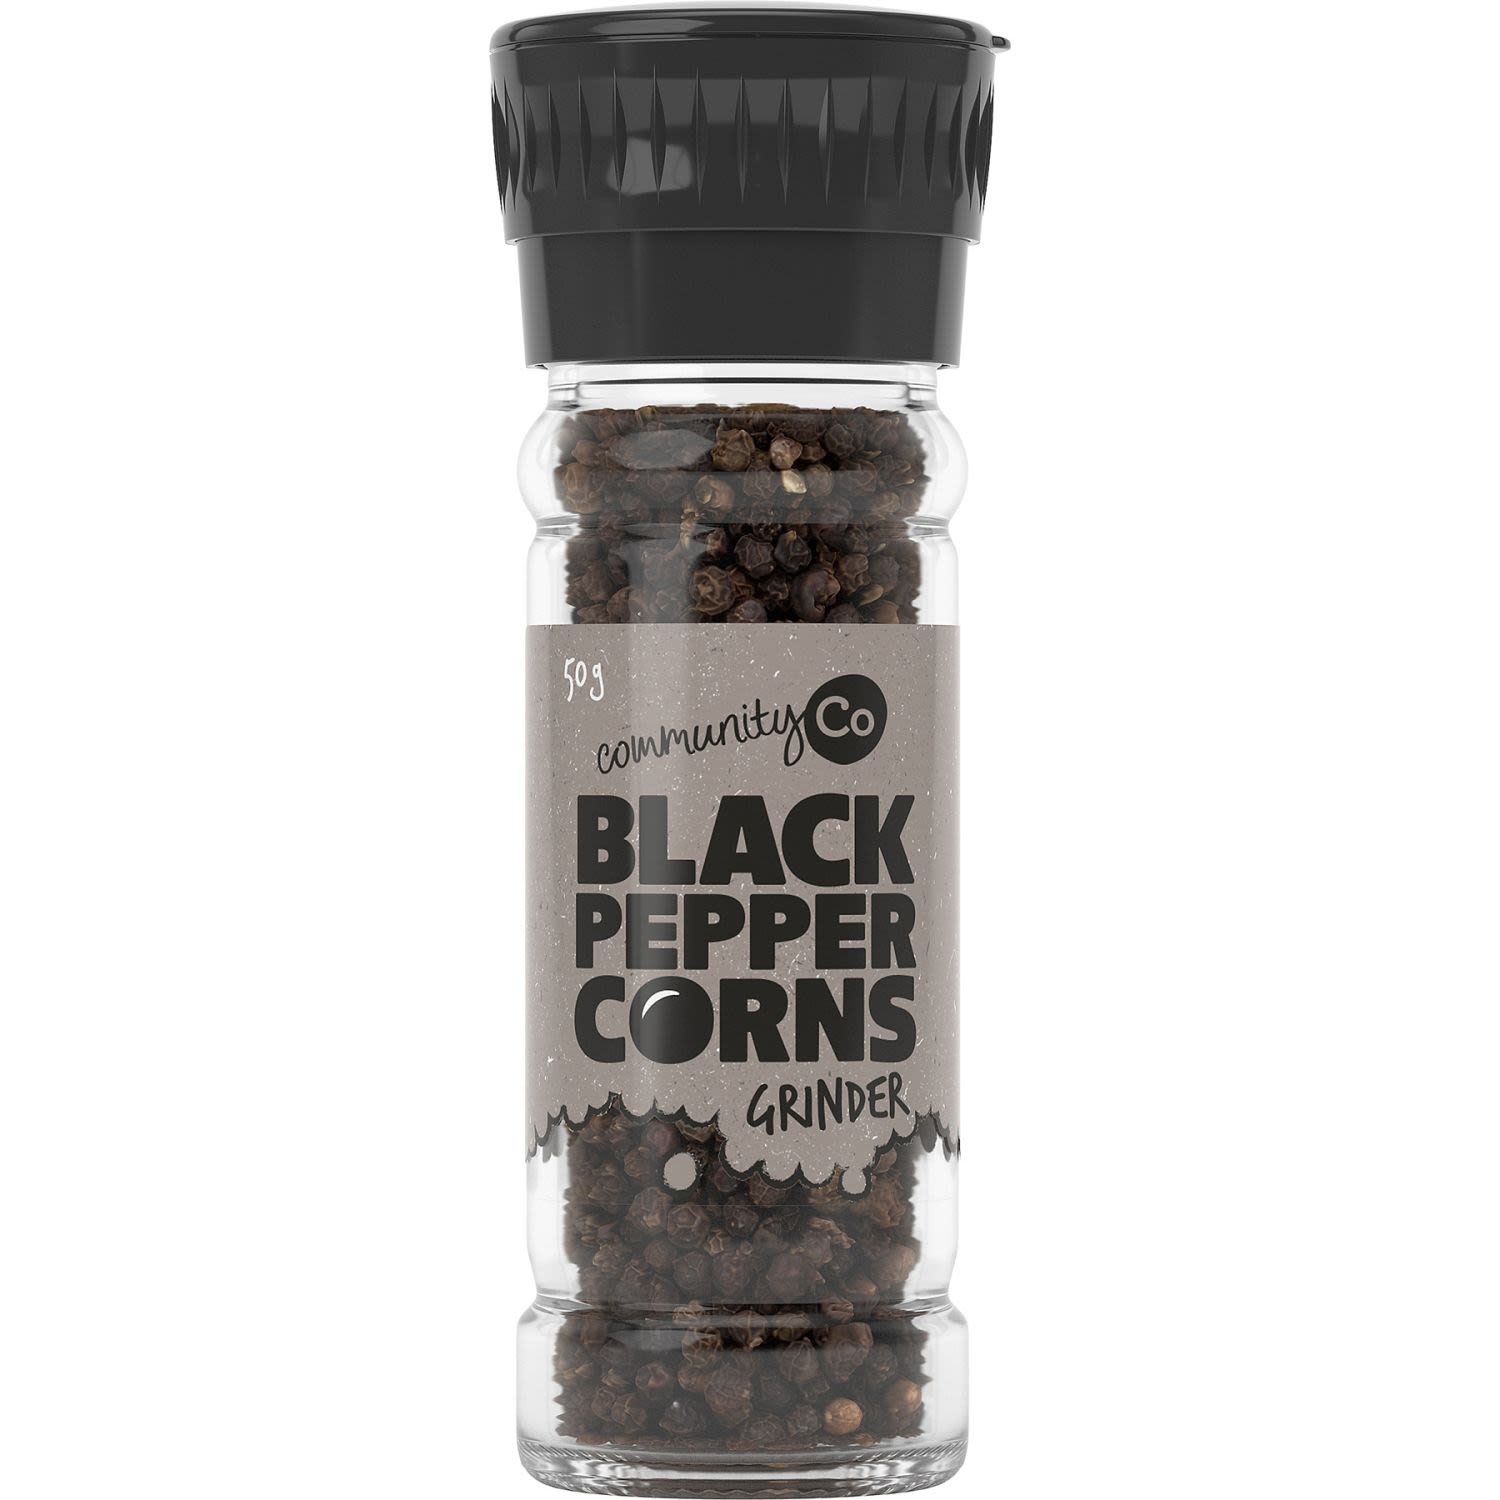 Community Co Black Peppercorn Grinder, 50 Gram